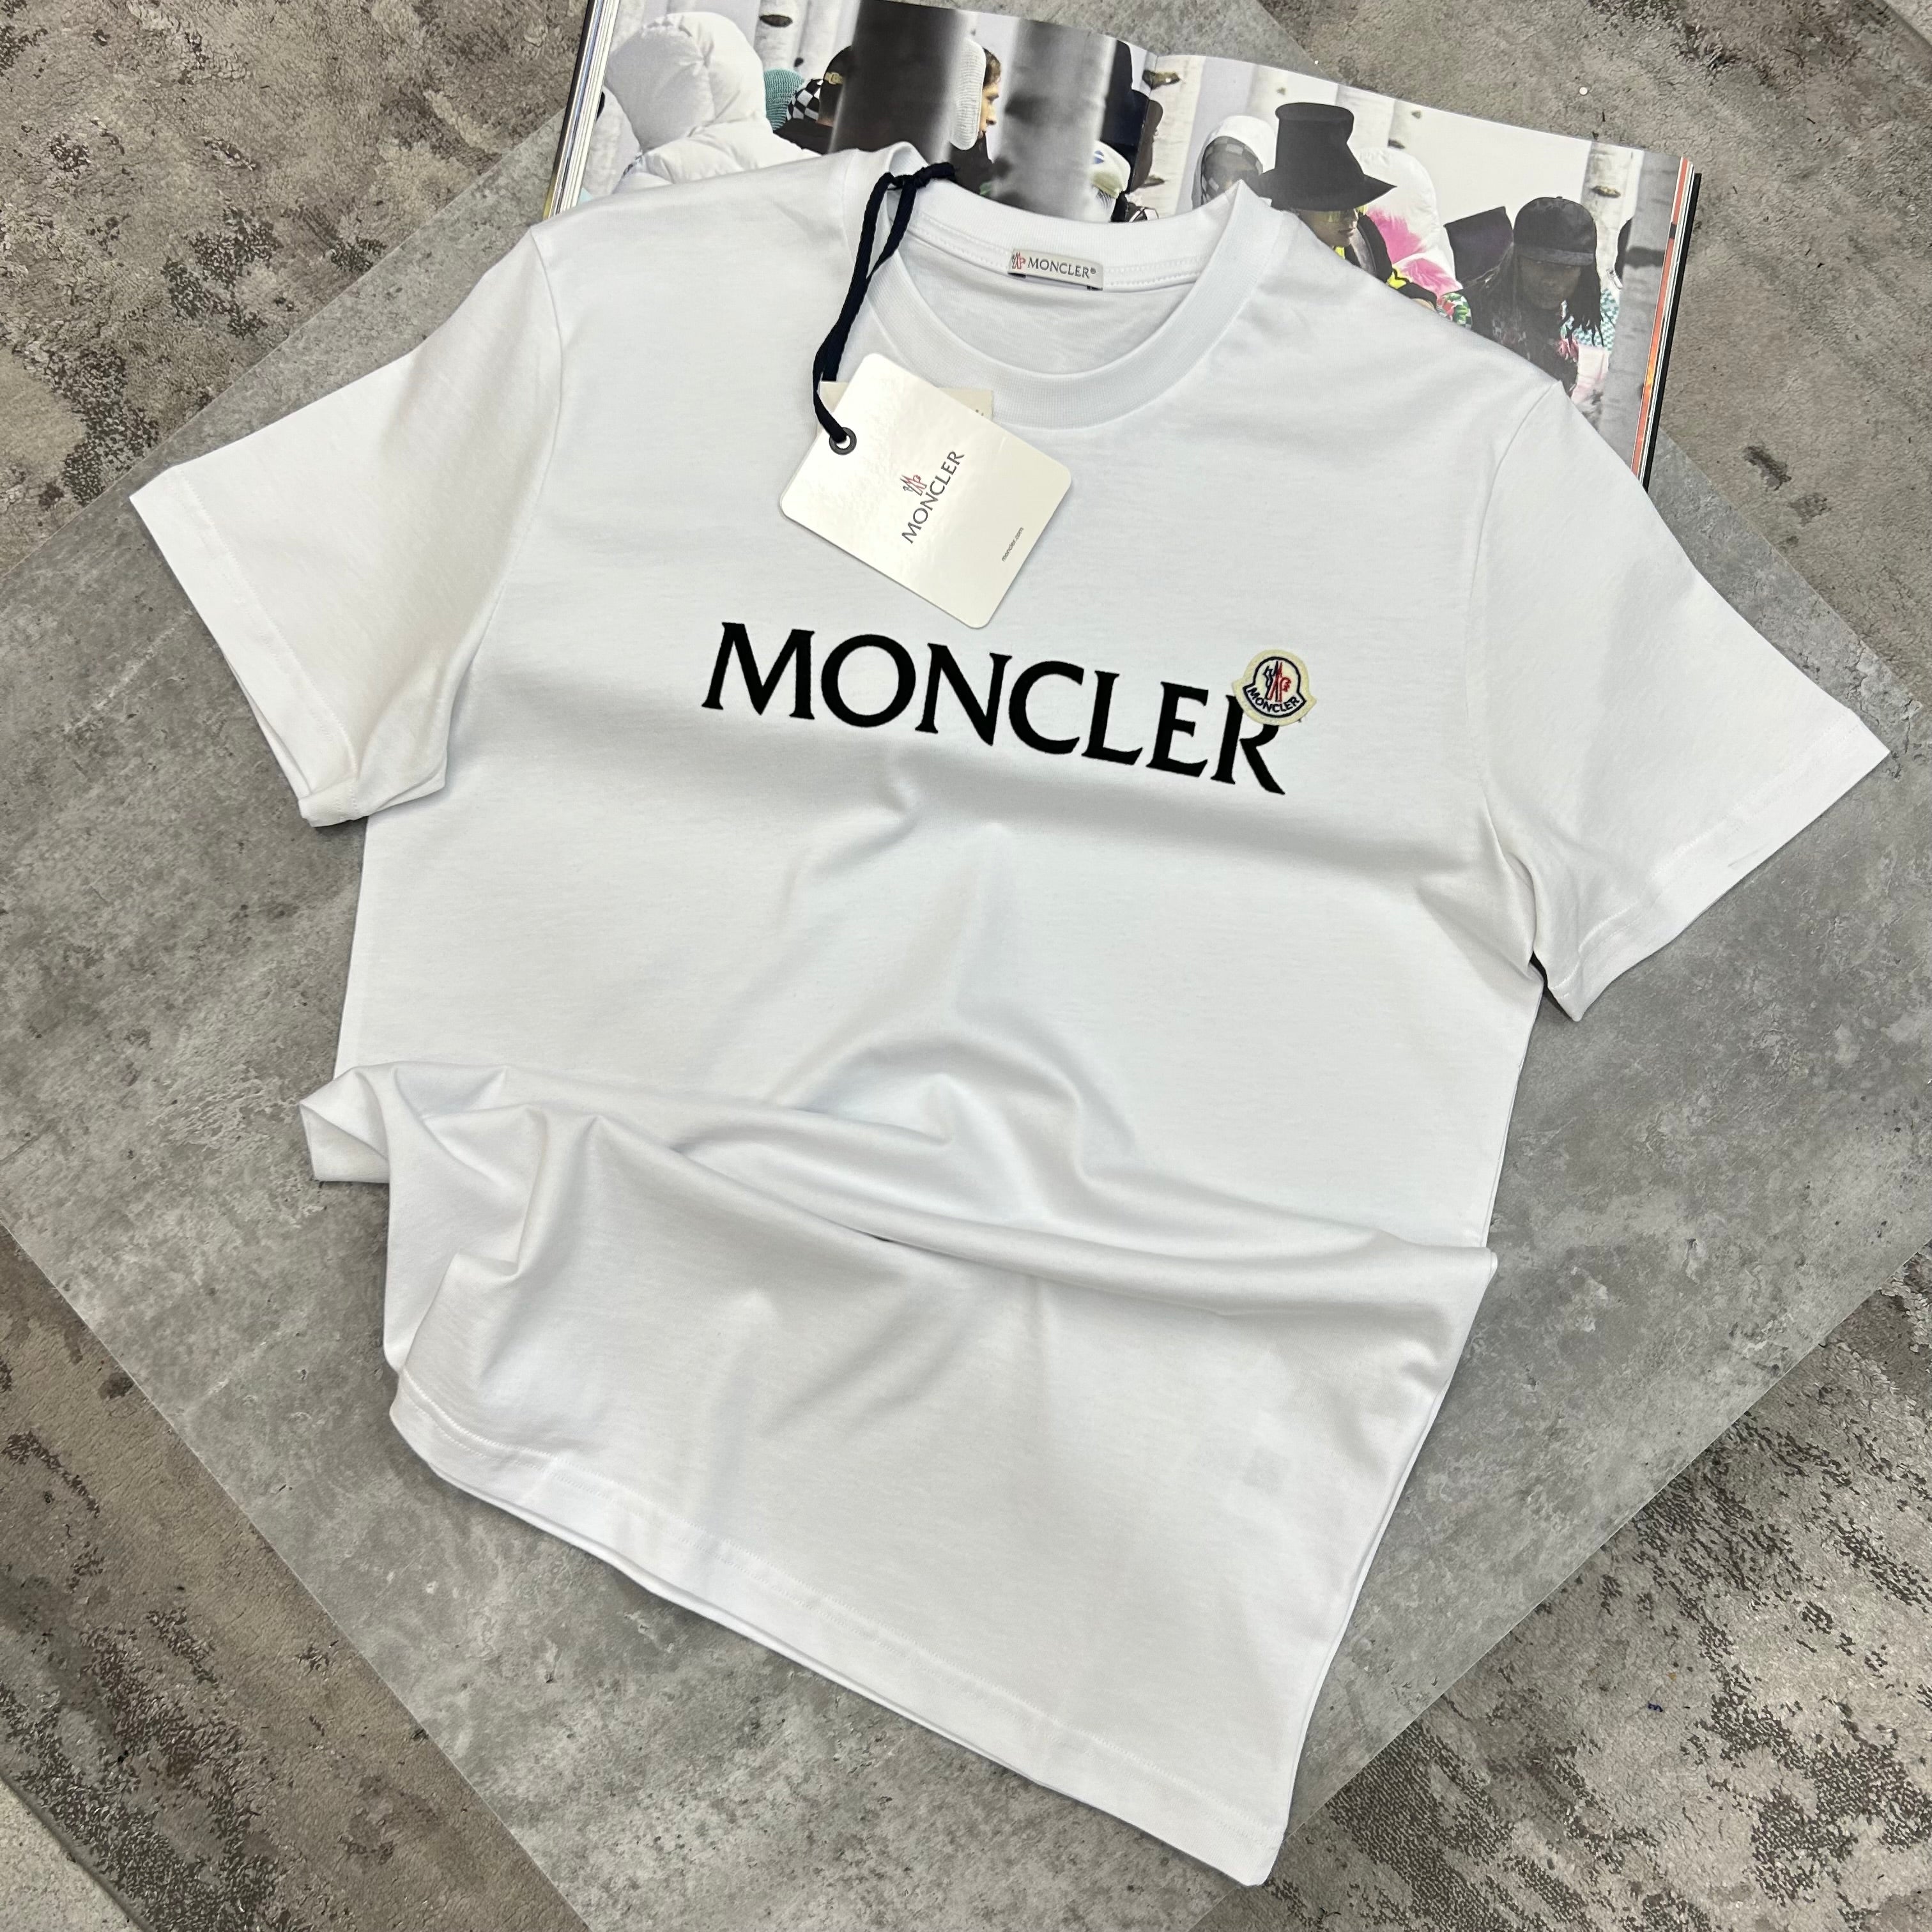 MONCLER - T-SHIRT - WHITE